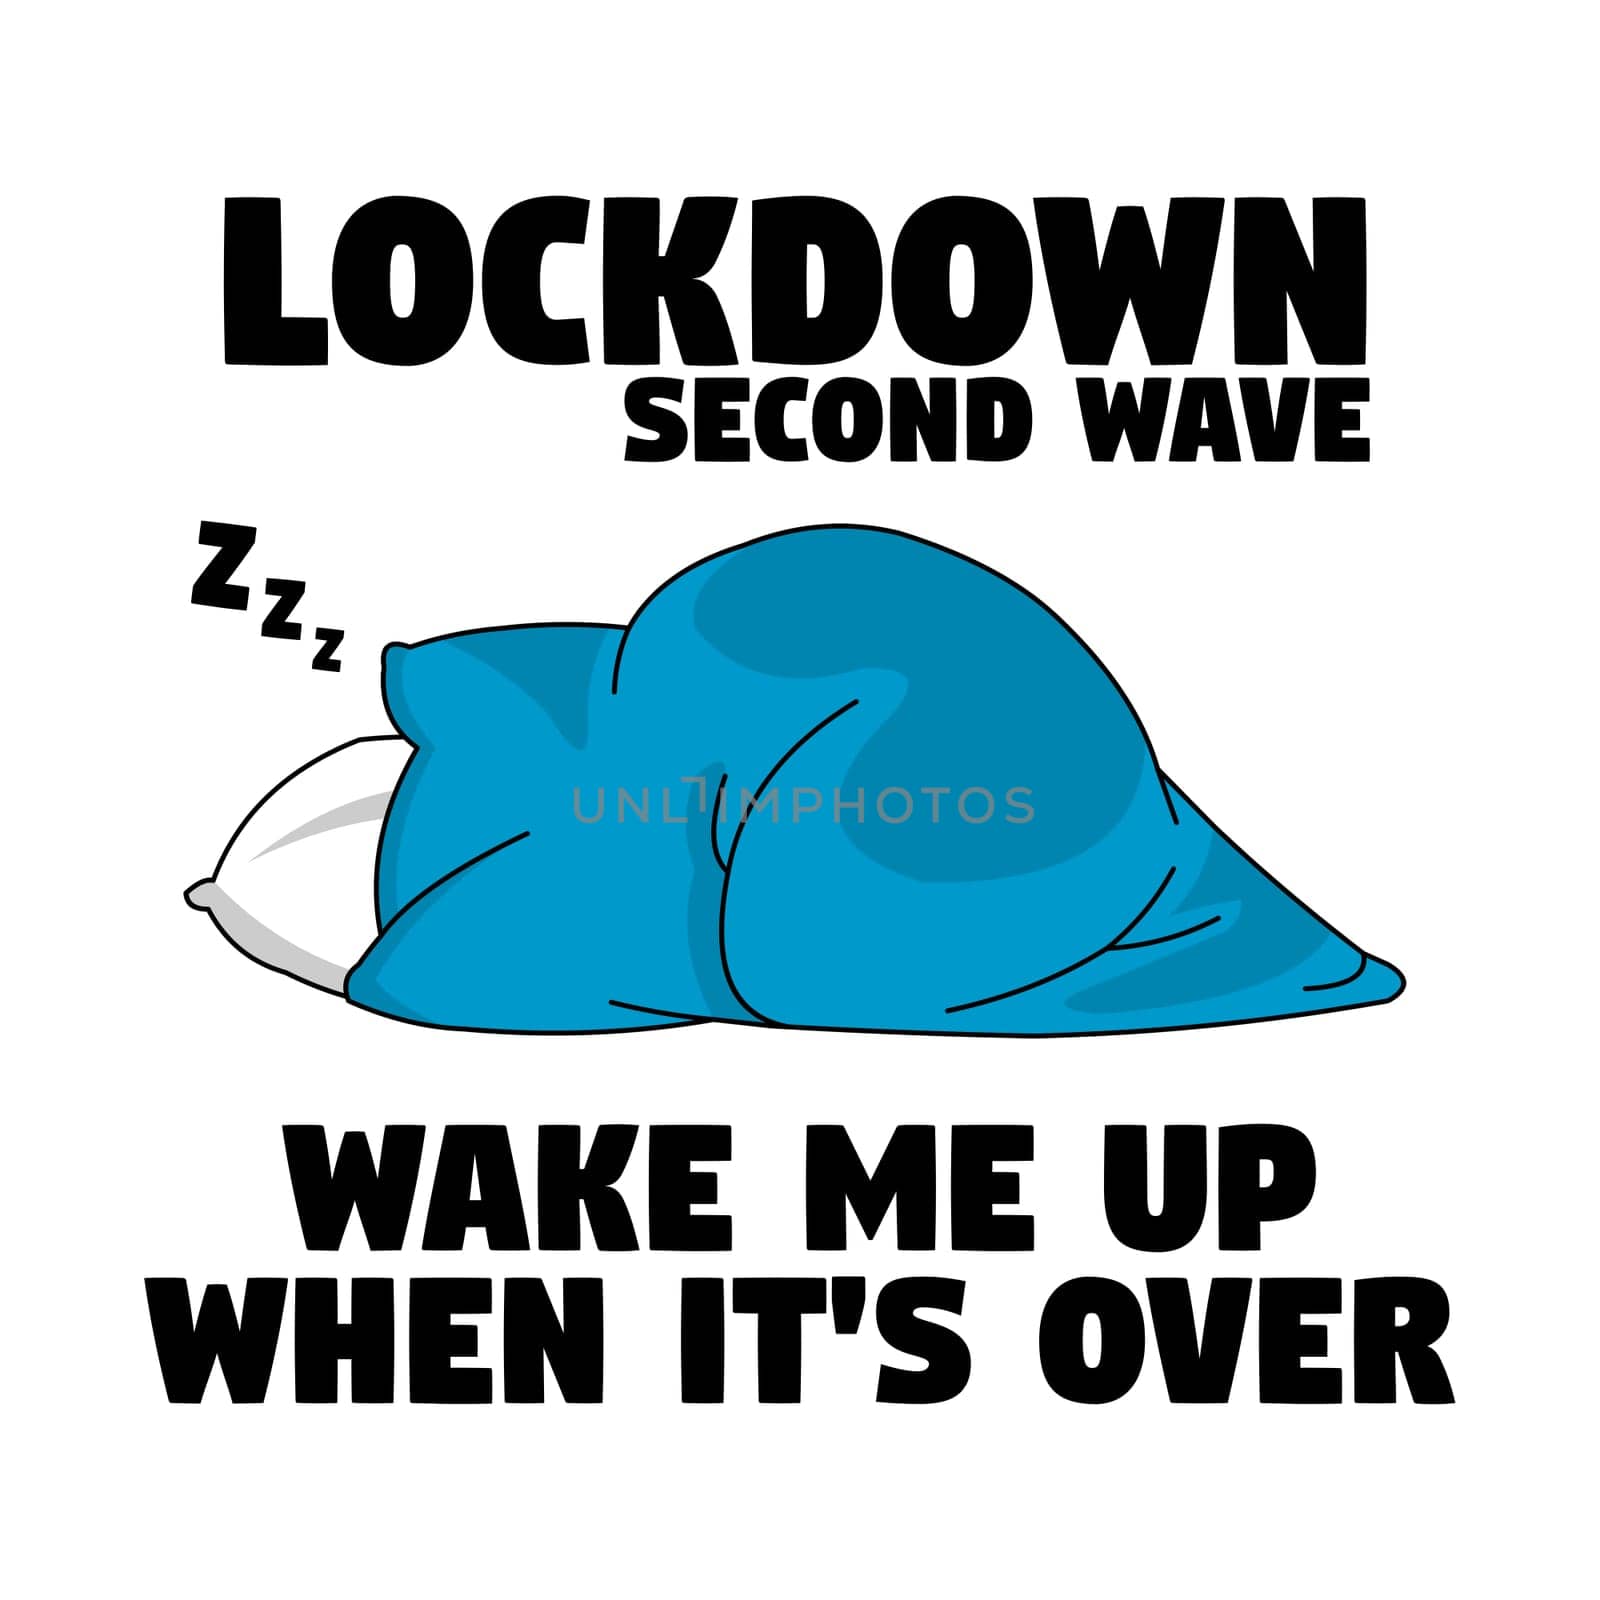 Lockdown second wave by Bigalbaloo